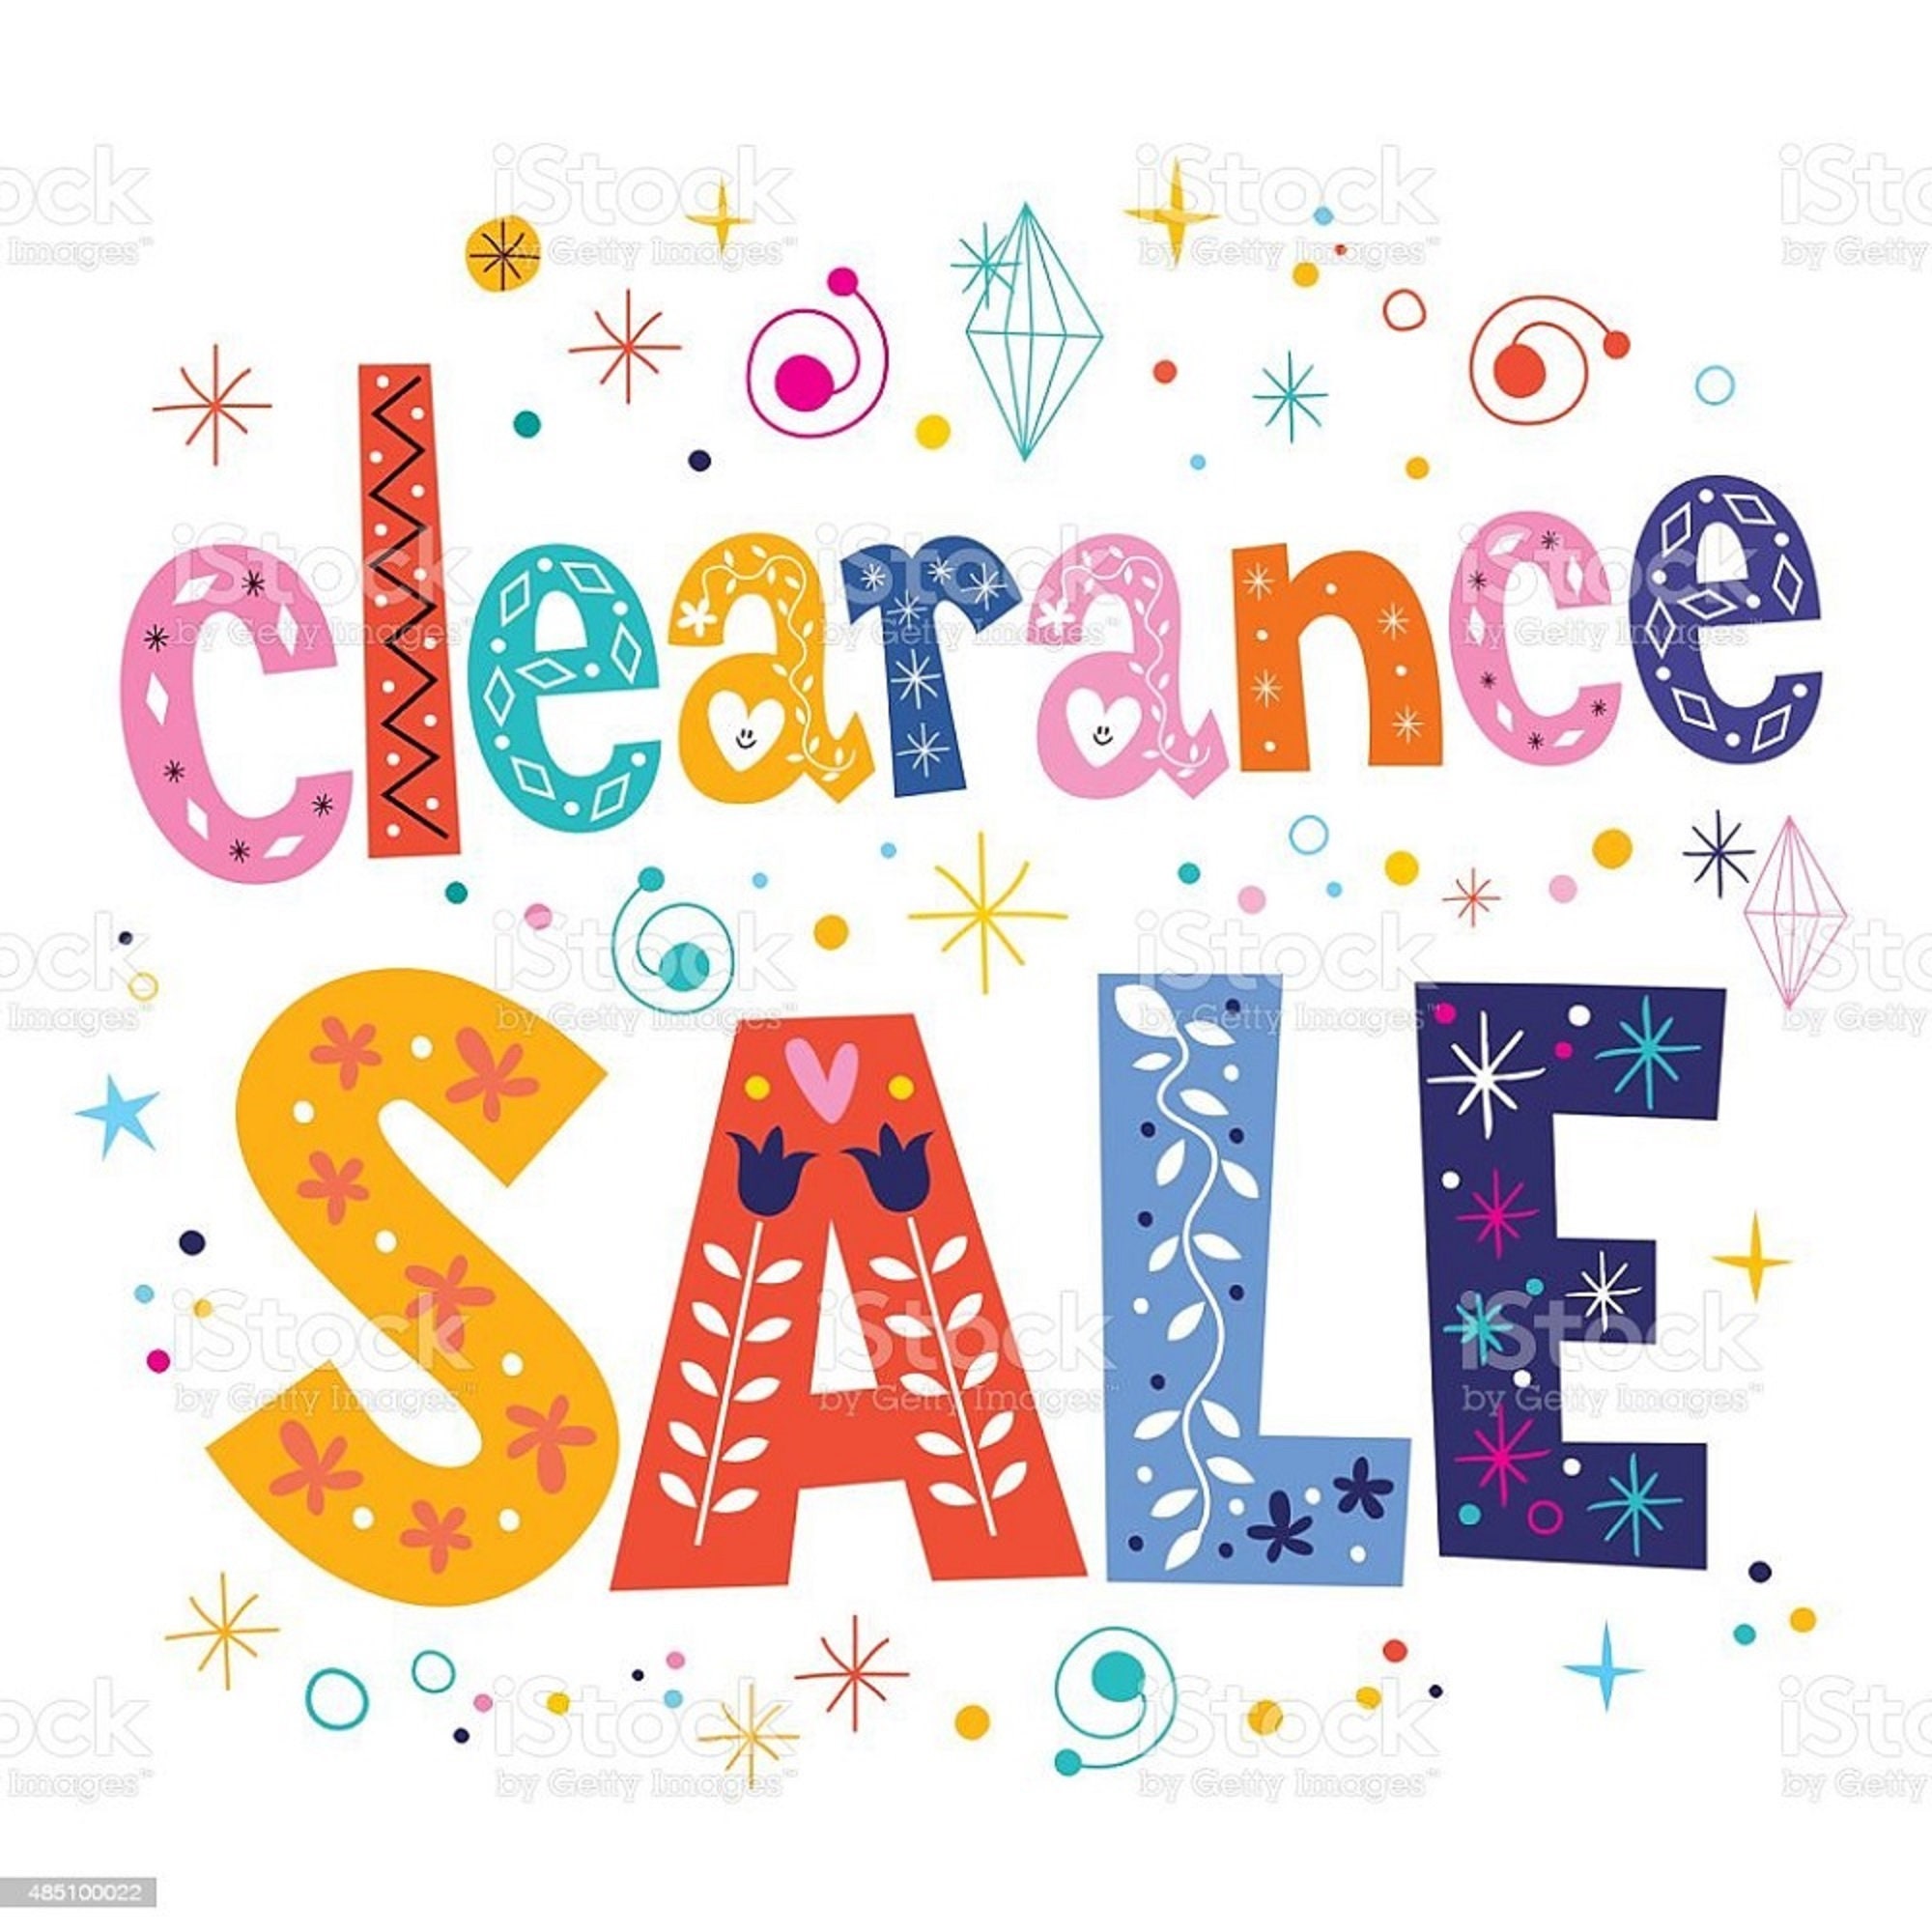 Clearance Sale Sale İtems, Handmade Bracelet, Handmade Pottery, Handmade  Flower Pot, Vase, Clearence Sale -  Norway